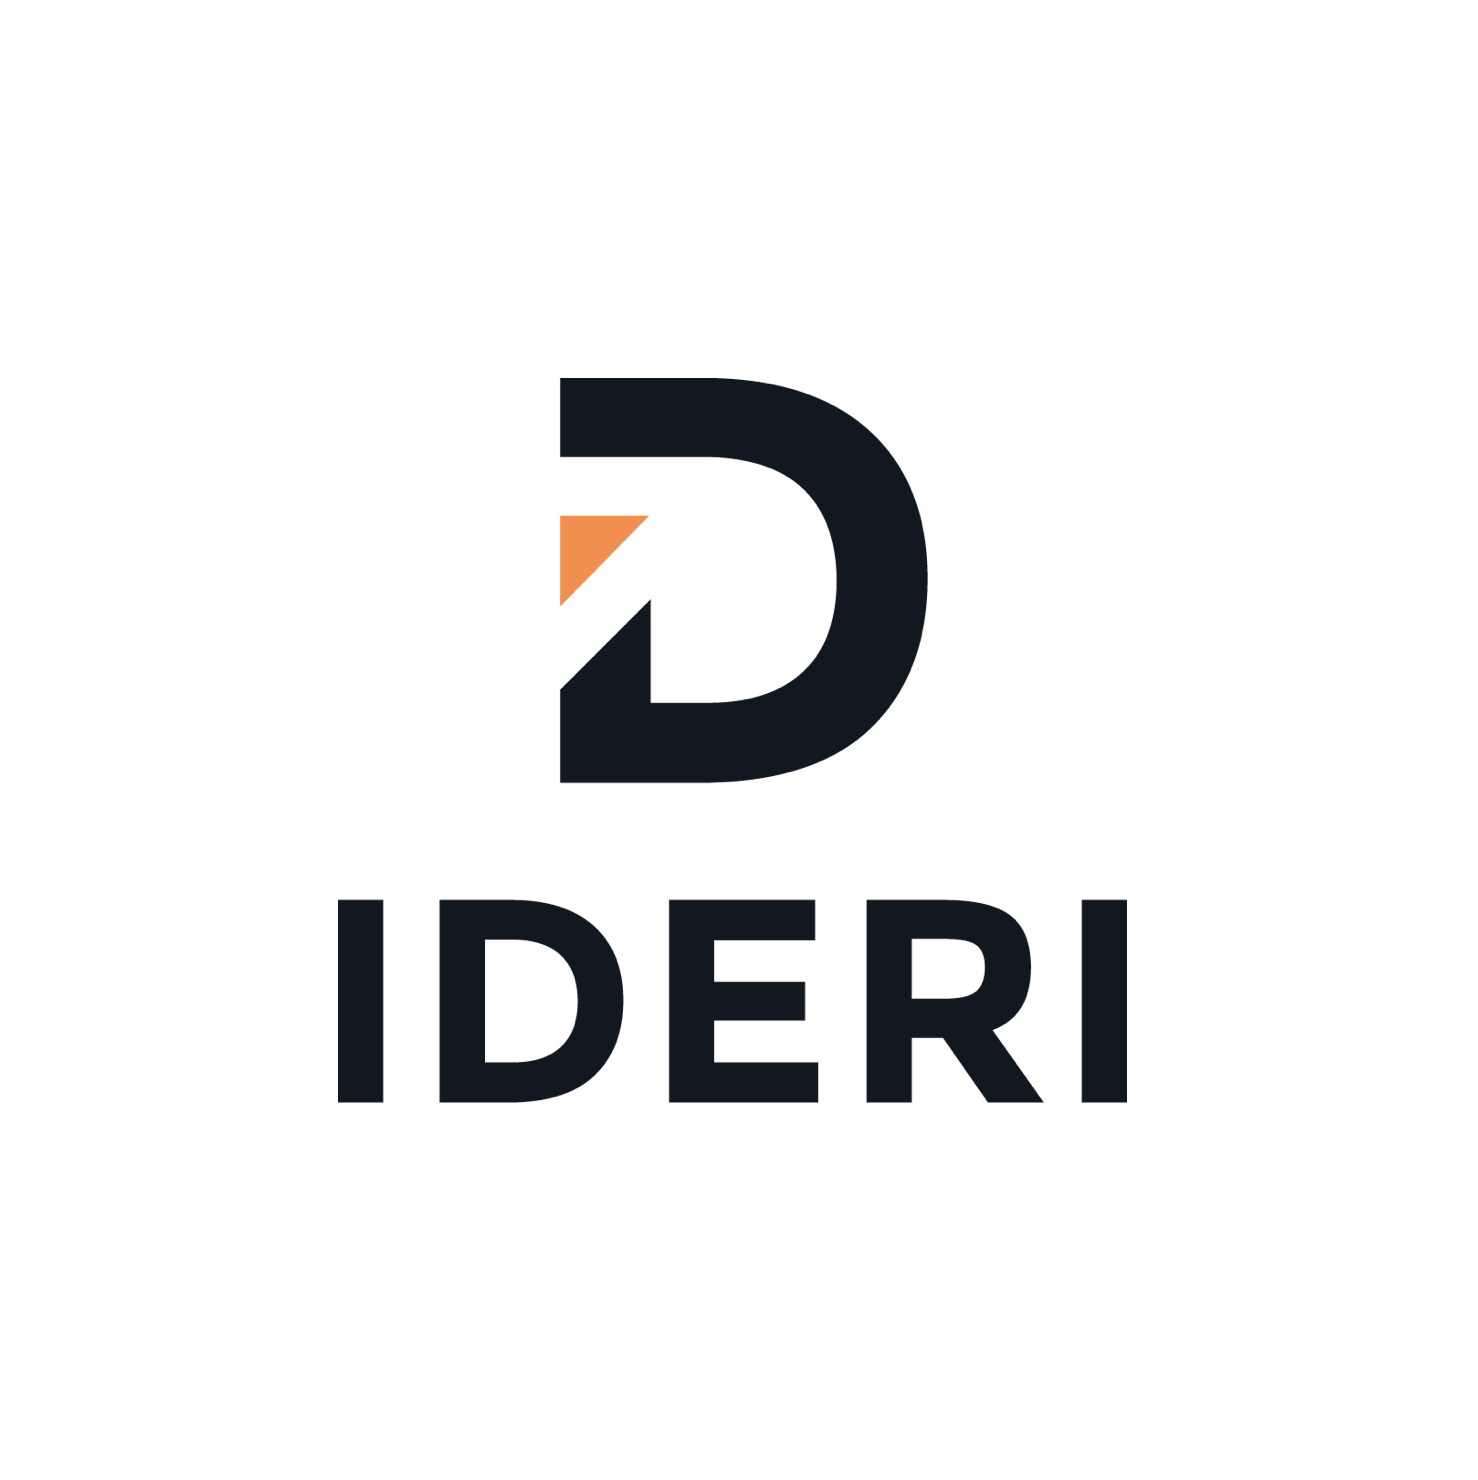 About IDERI